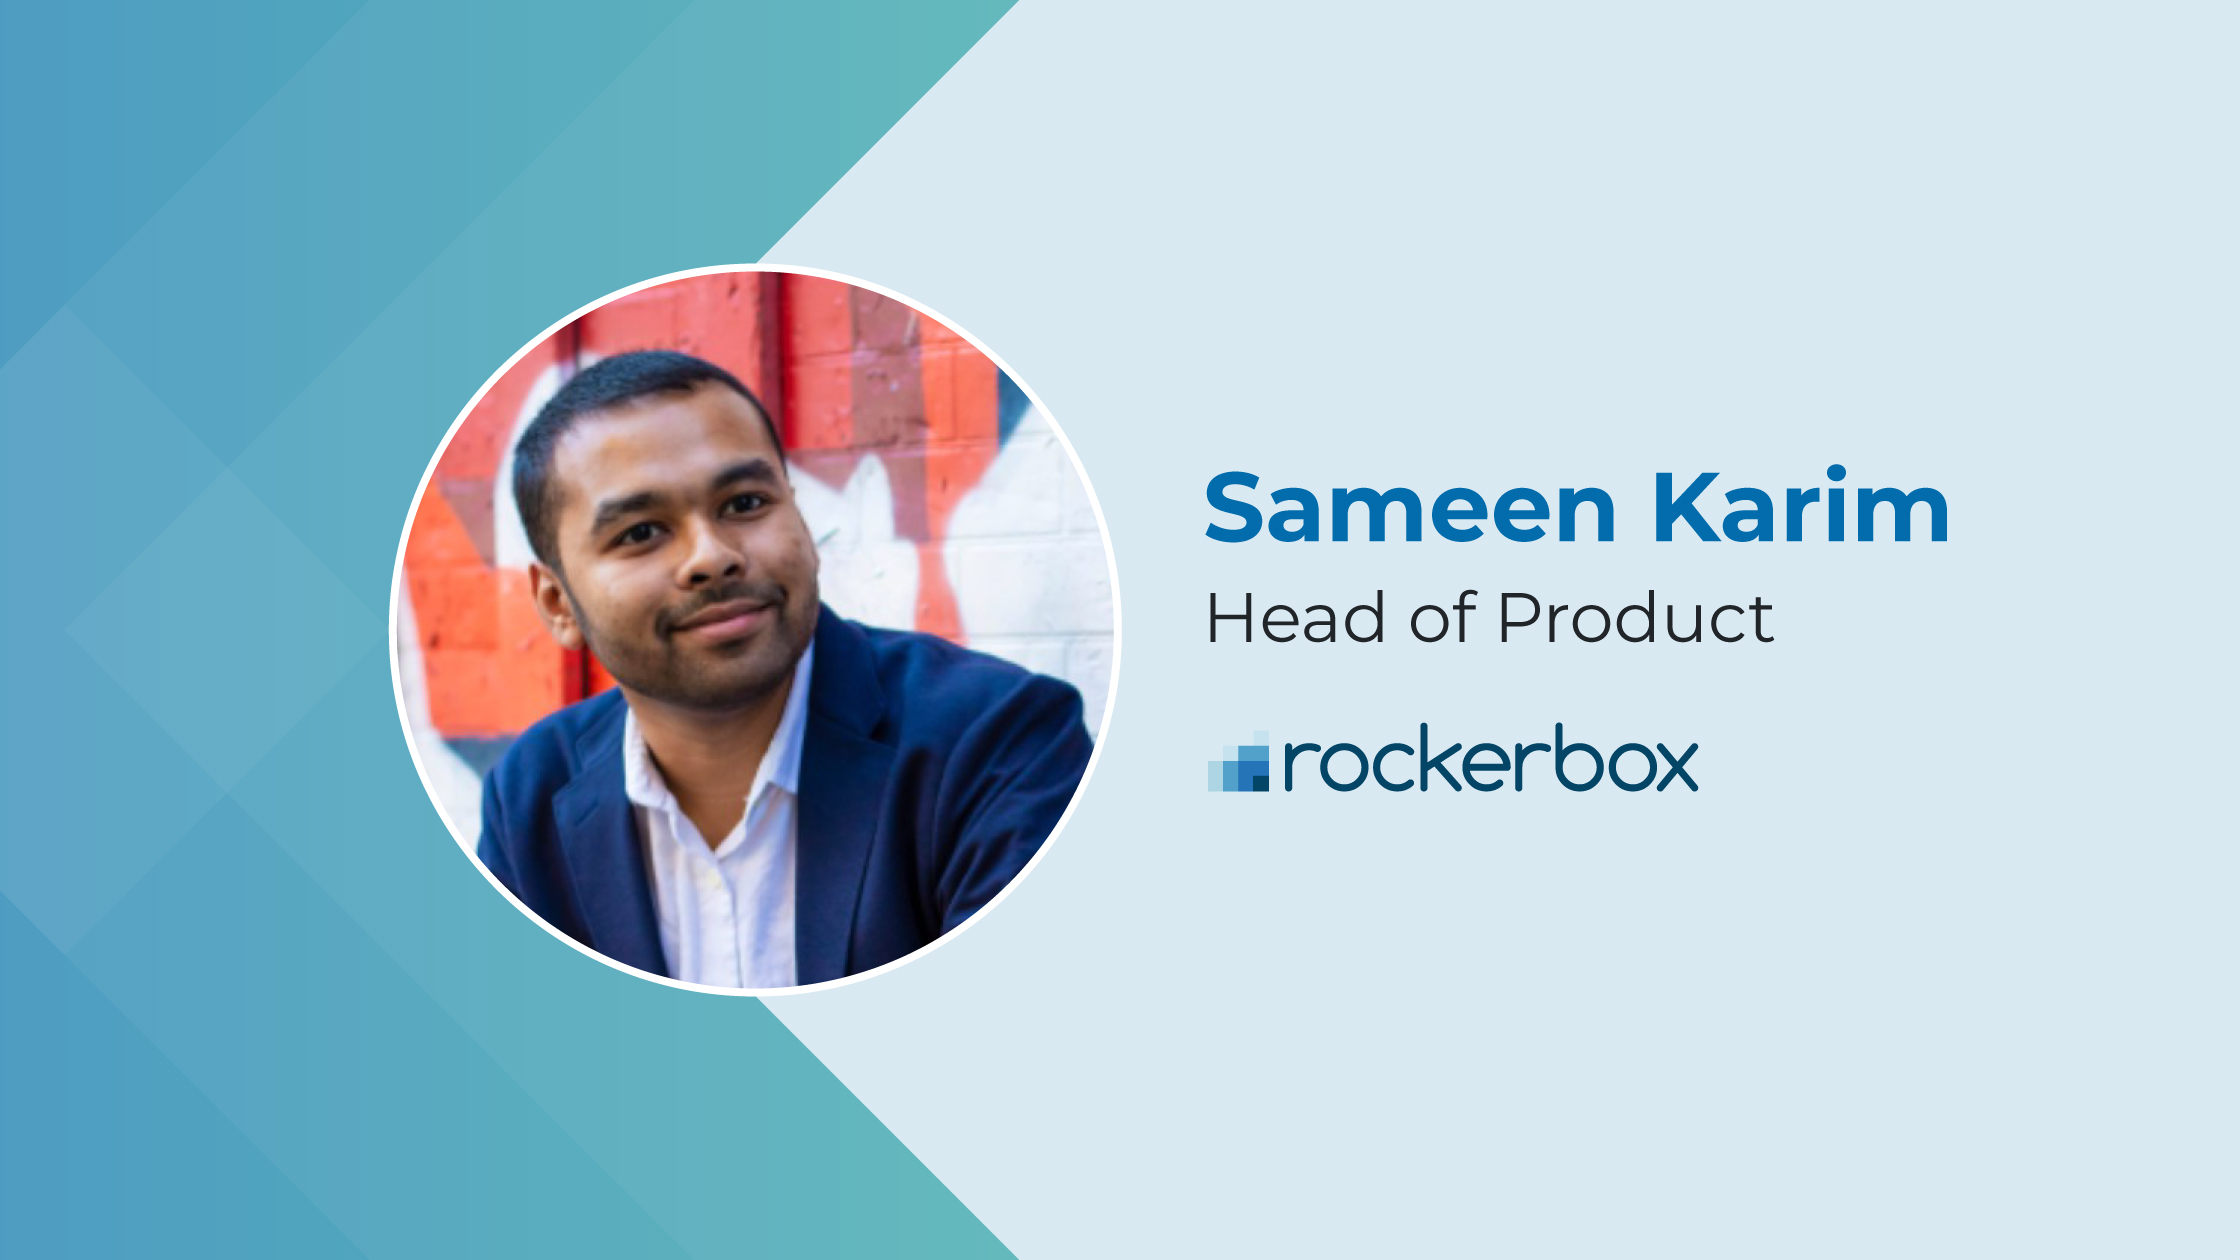 Sameen Karim, Head of Product at Rockerbox